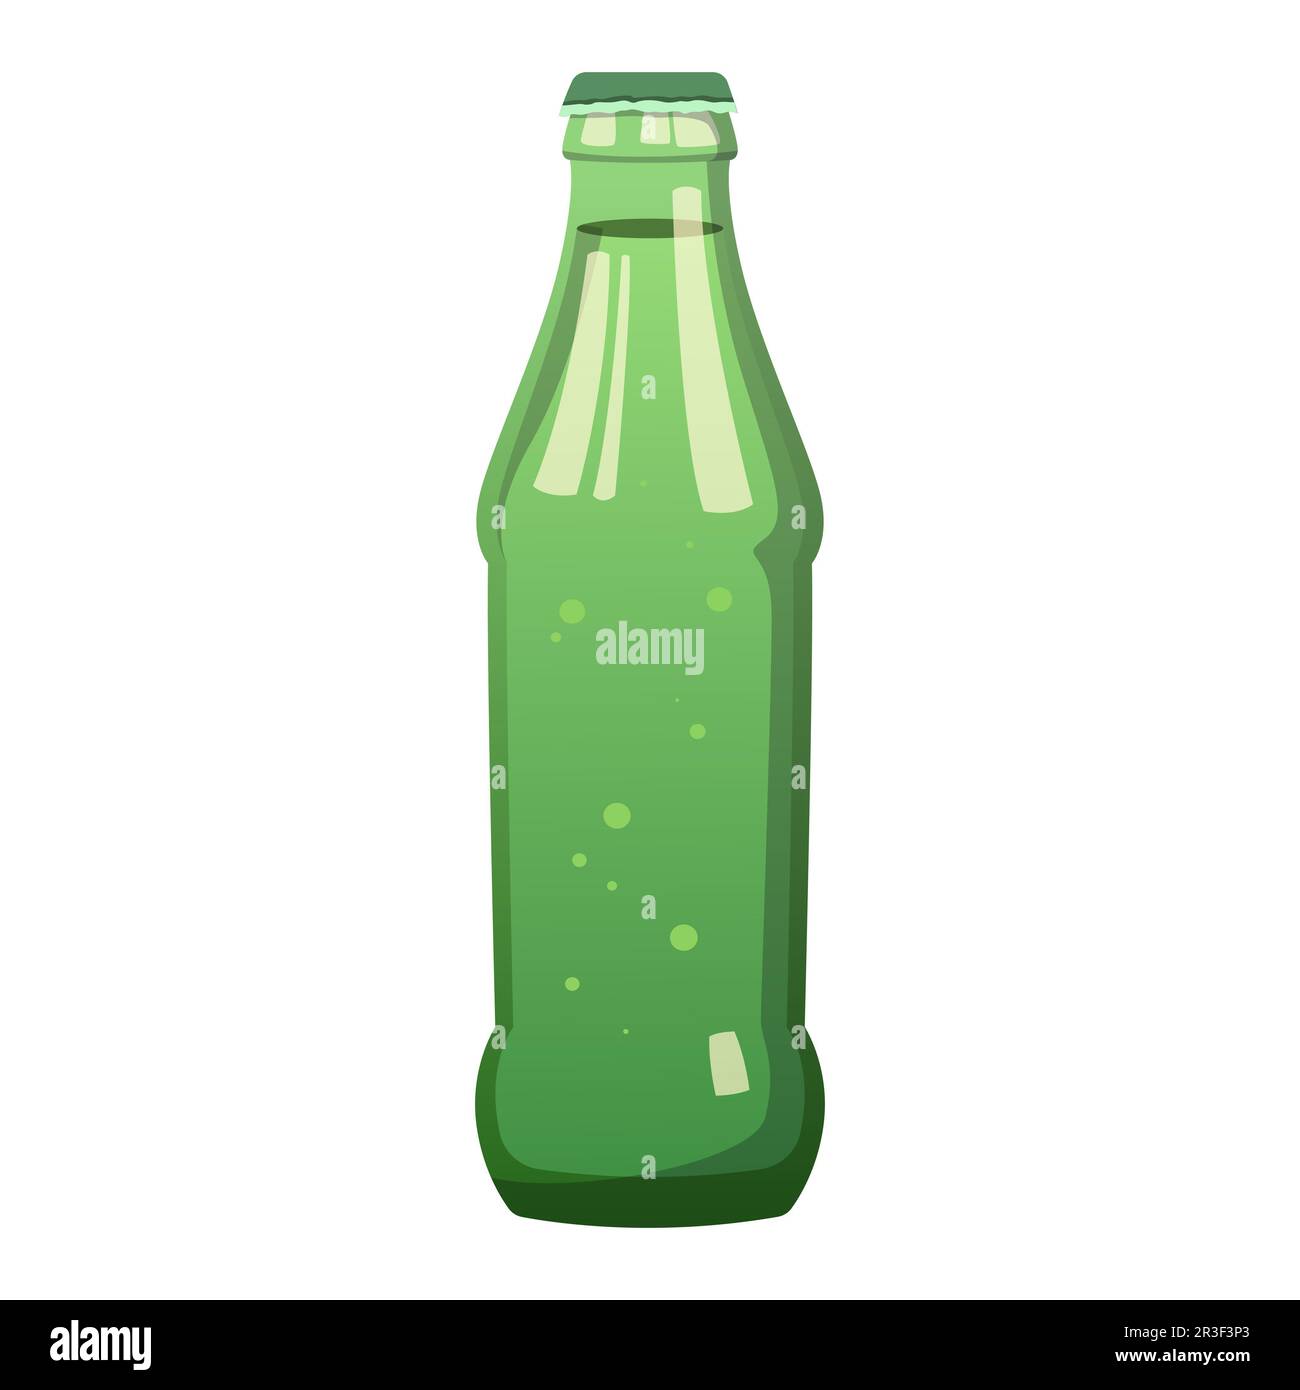 https://c8.alamy.com/compes/2r3f3p3/realista-botella-de-agua-de-soda-aislada-sobre-fondo-blanco-vector-2r3f3p3.jpg